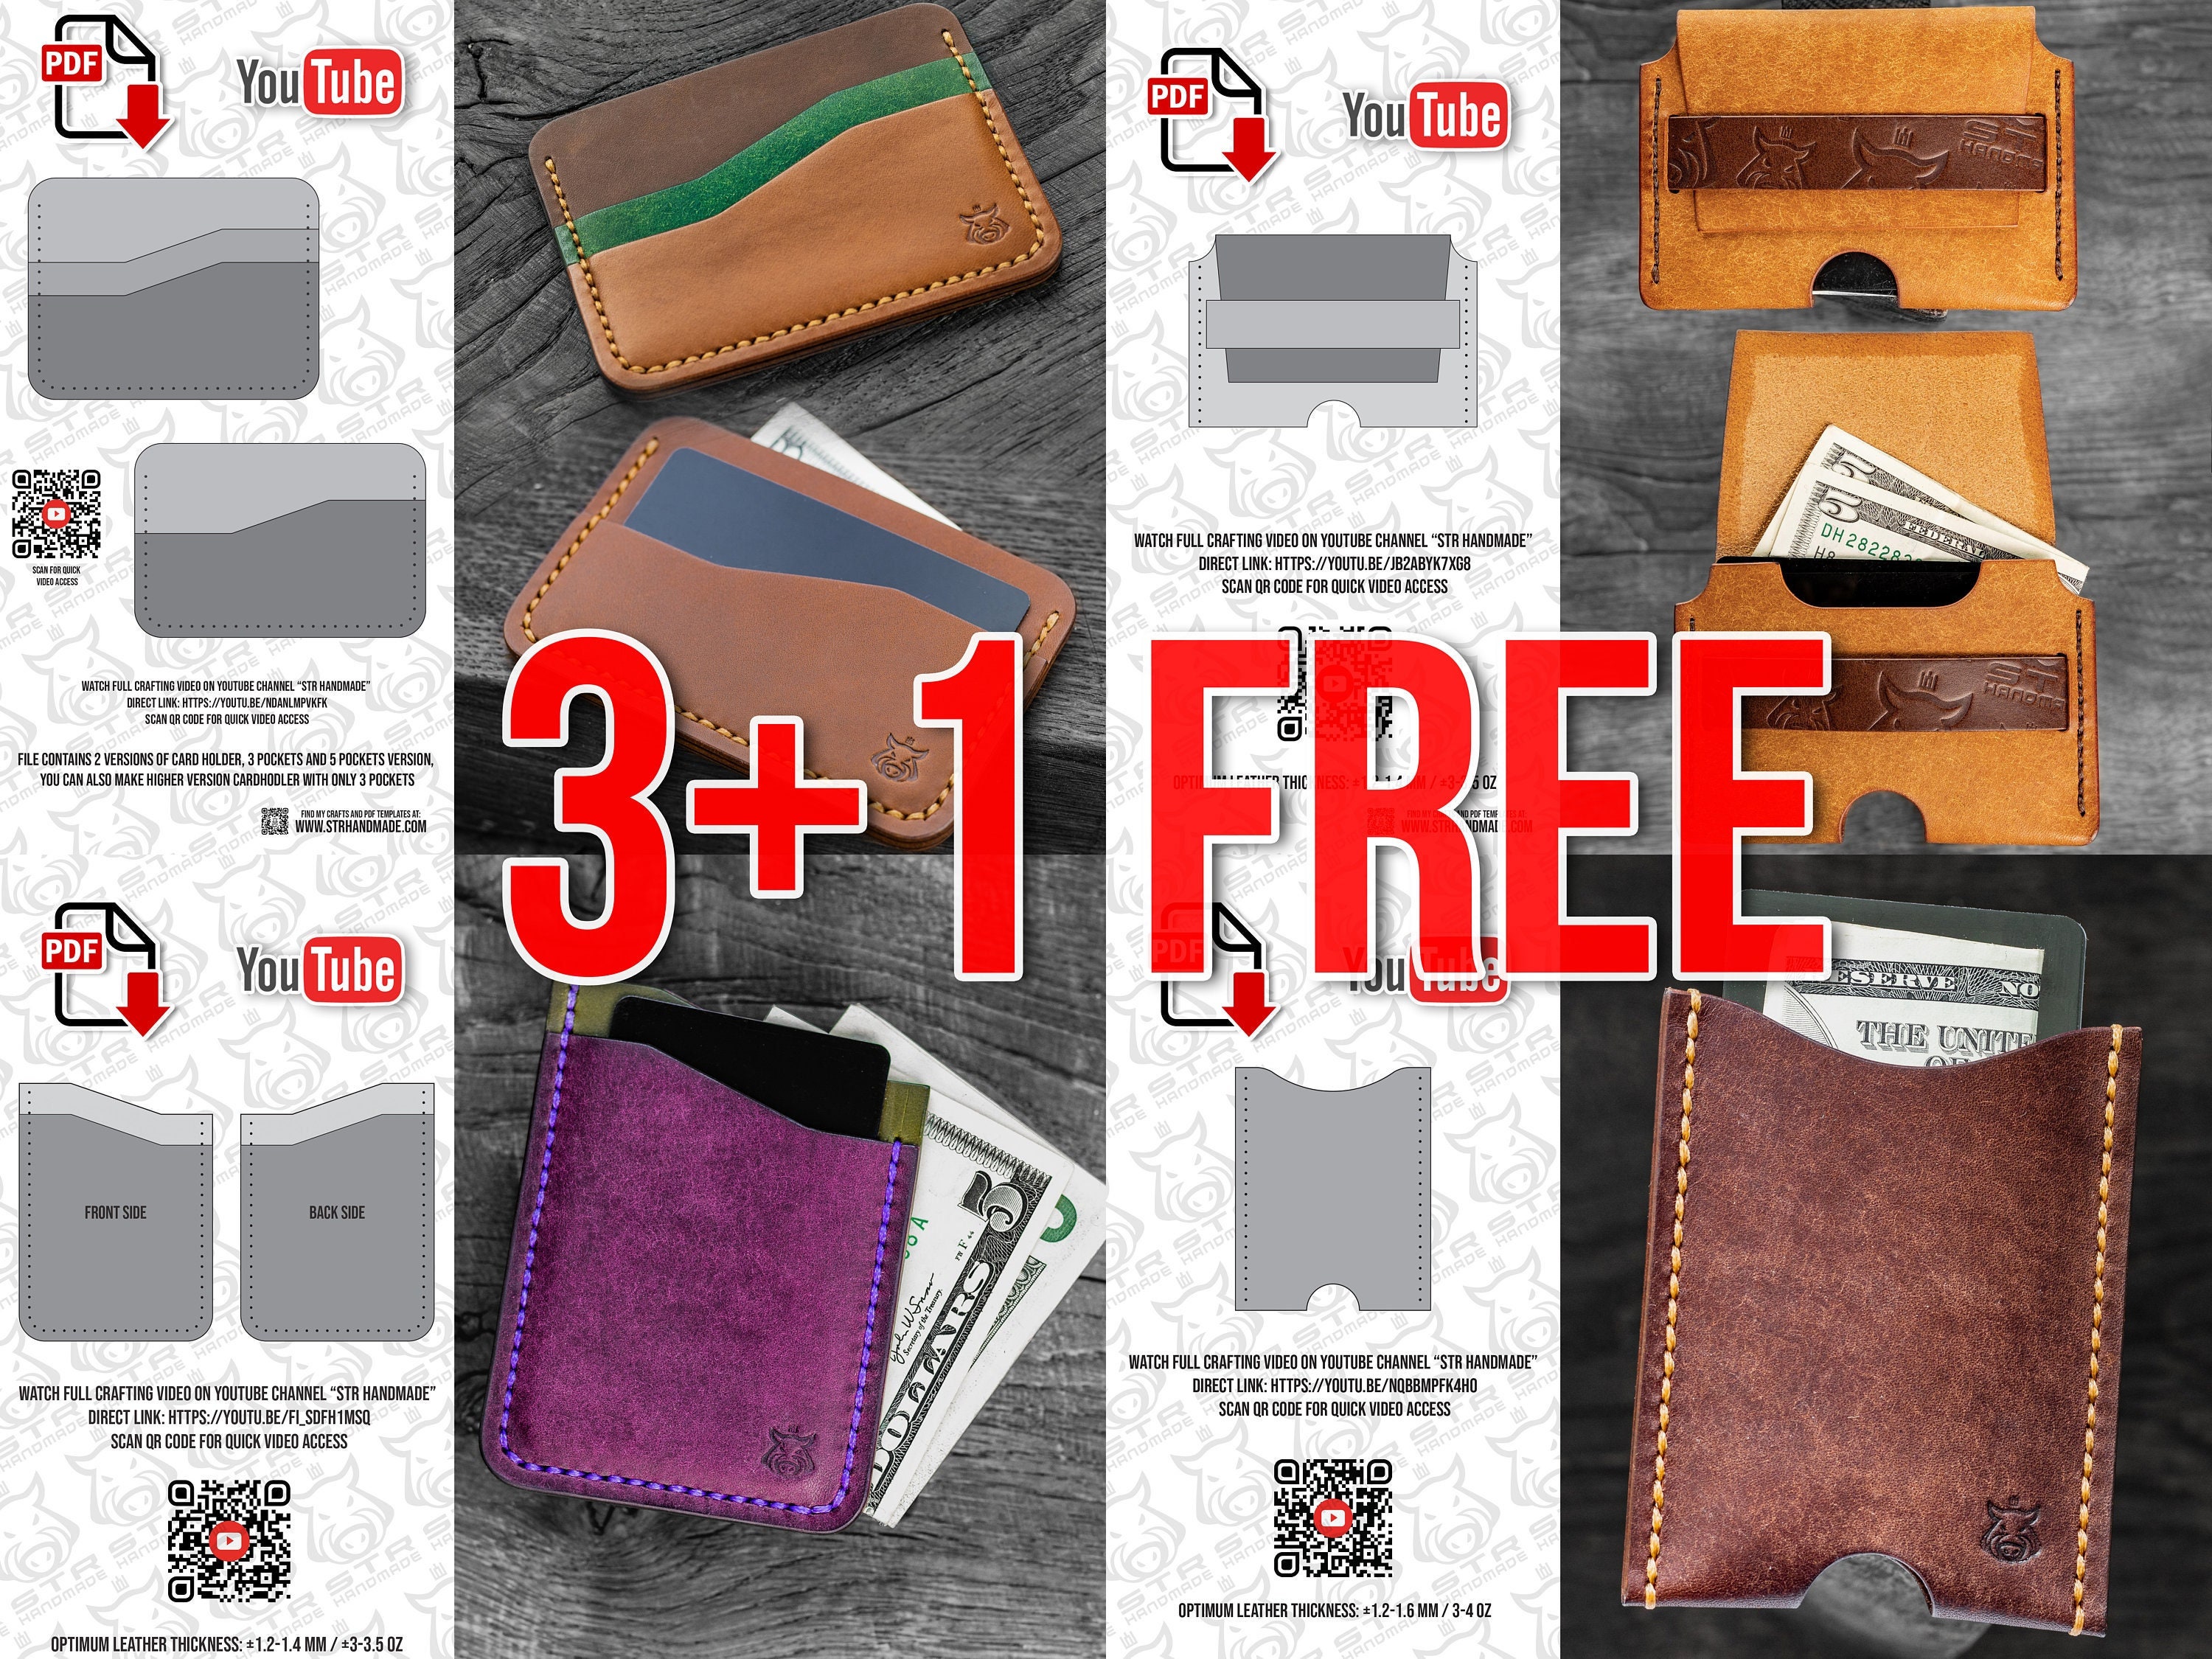 PDF Wallet Leather / Leather Pattern / Template Wallet / Long Wallet PDF /  Document Holder / Man Wallet Template / Pattern Pdf Wallet 